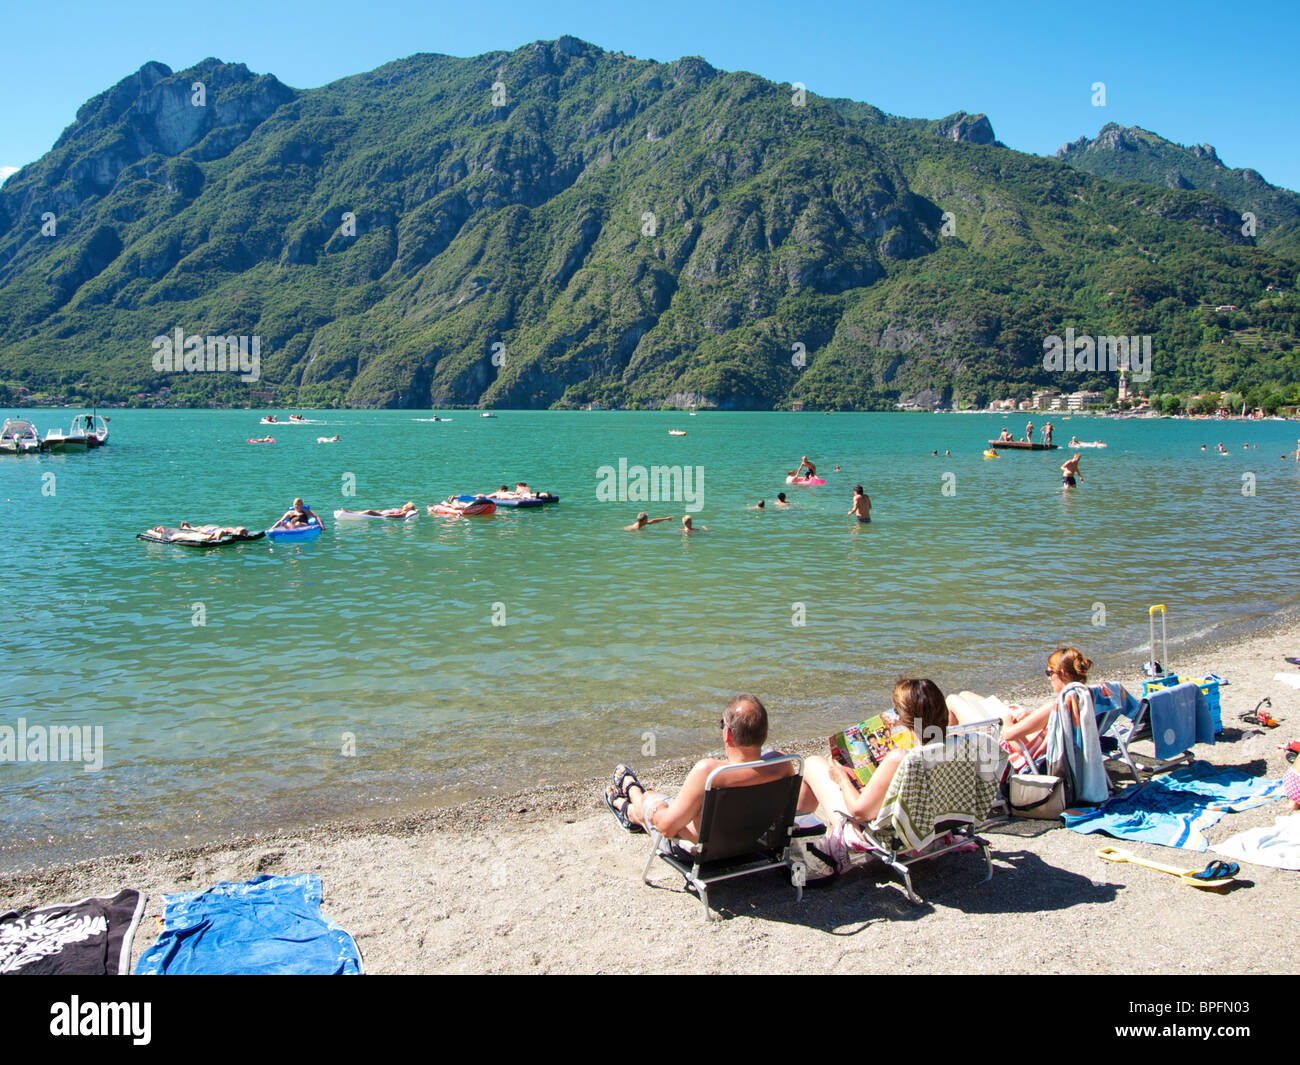 People sitting on the narrow beach and swimming at Porlezza, Lake Lugano, Italy Stock Photo